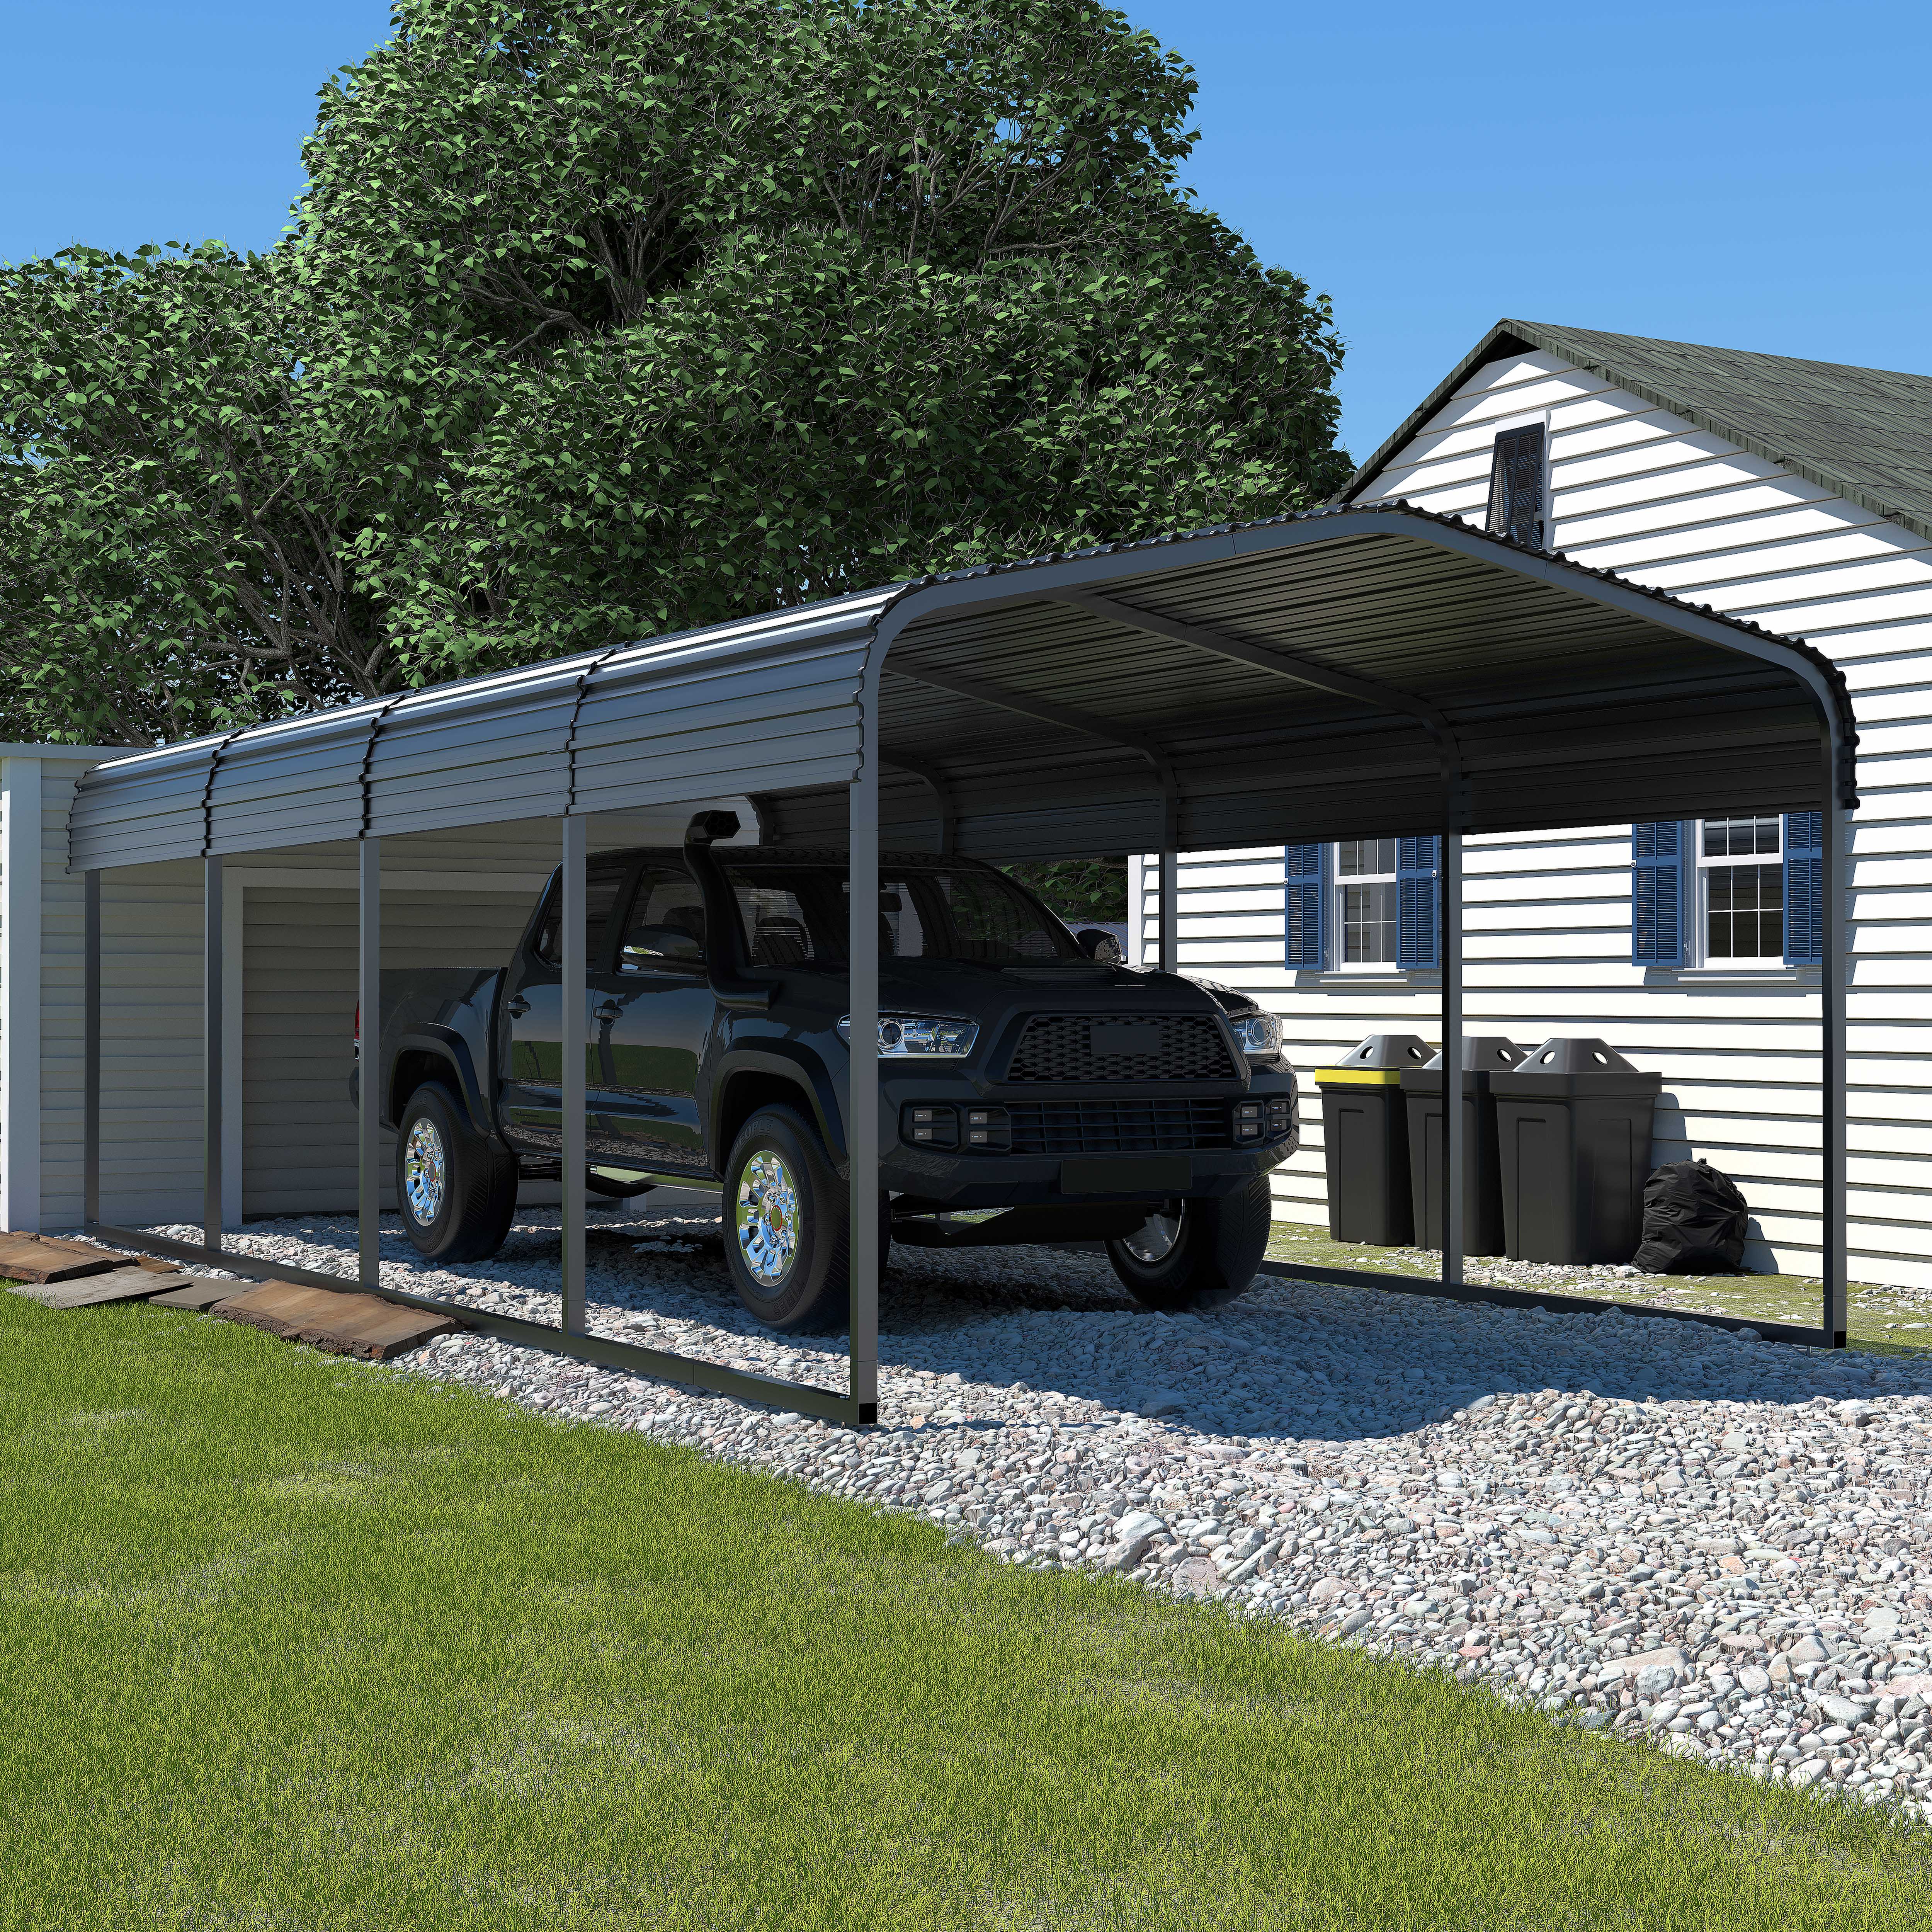 VEIKOUS 20' x 12' Outdoor Carport, Galvanized Metal Heavy Duty Garage Car Storage Shelter, Grey - image 1 of 17